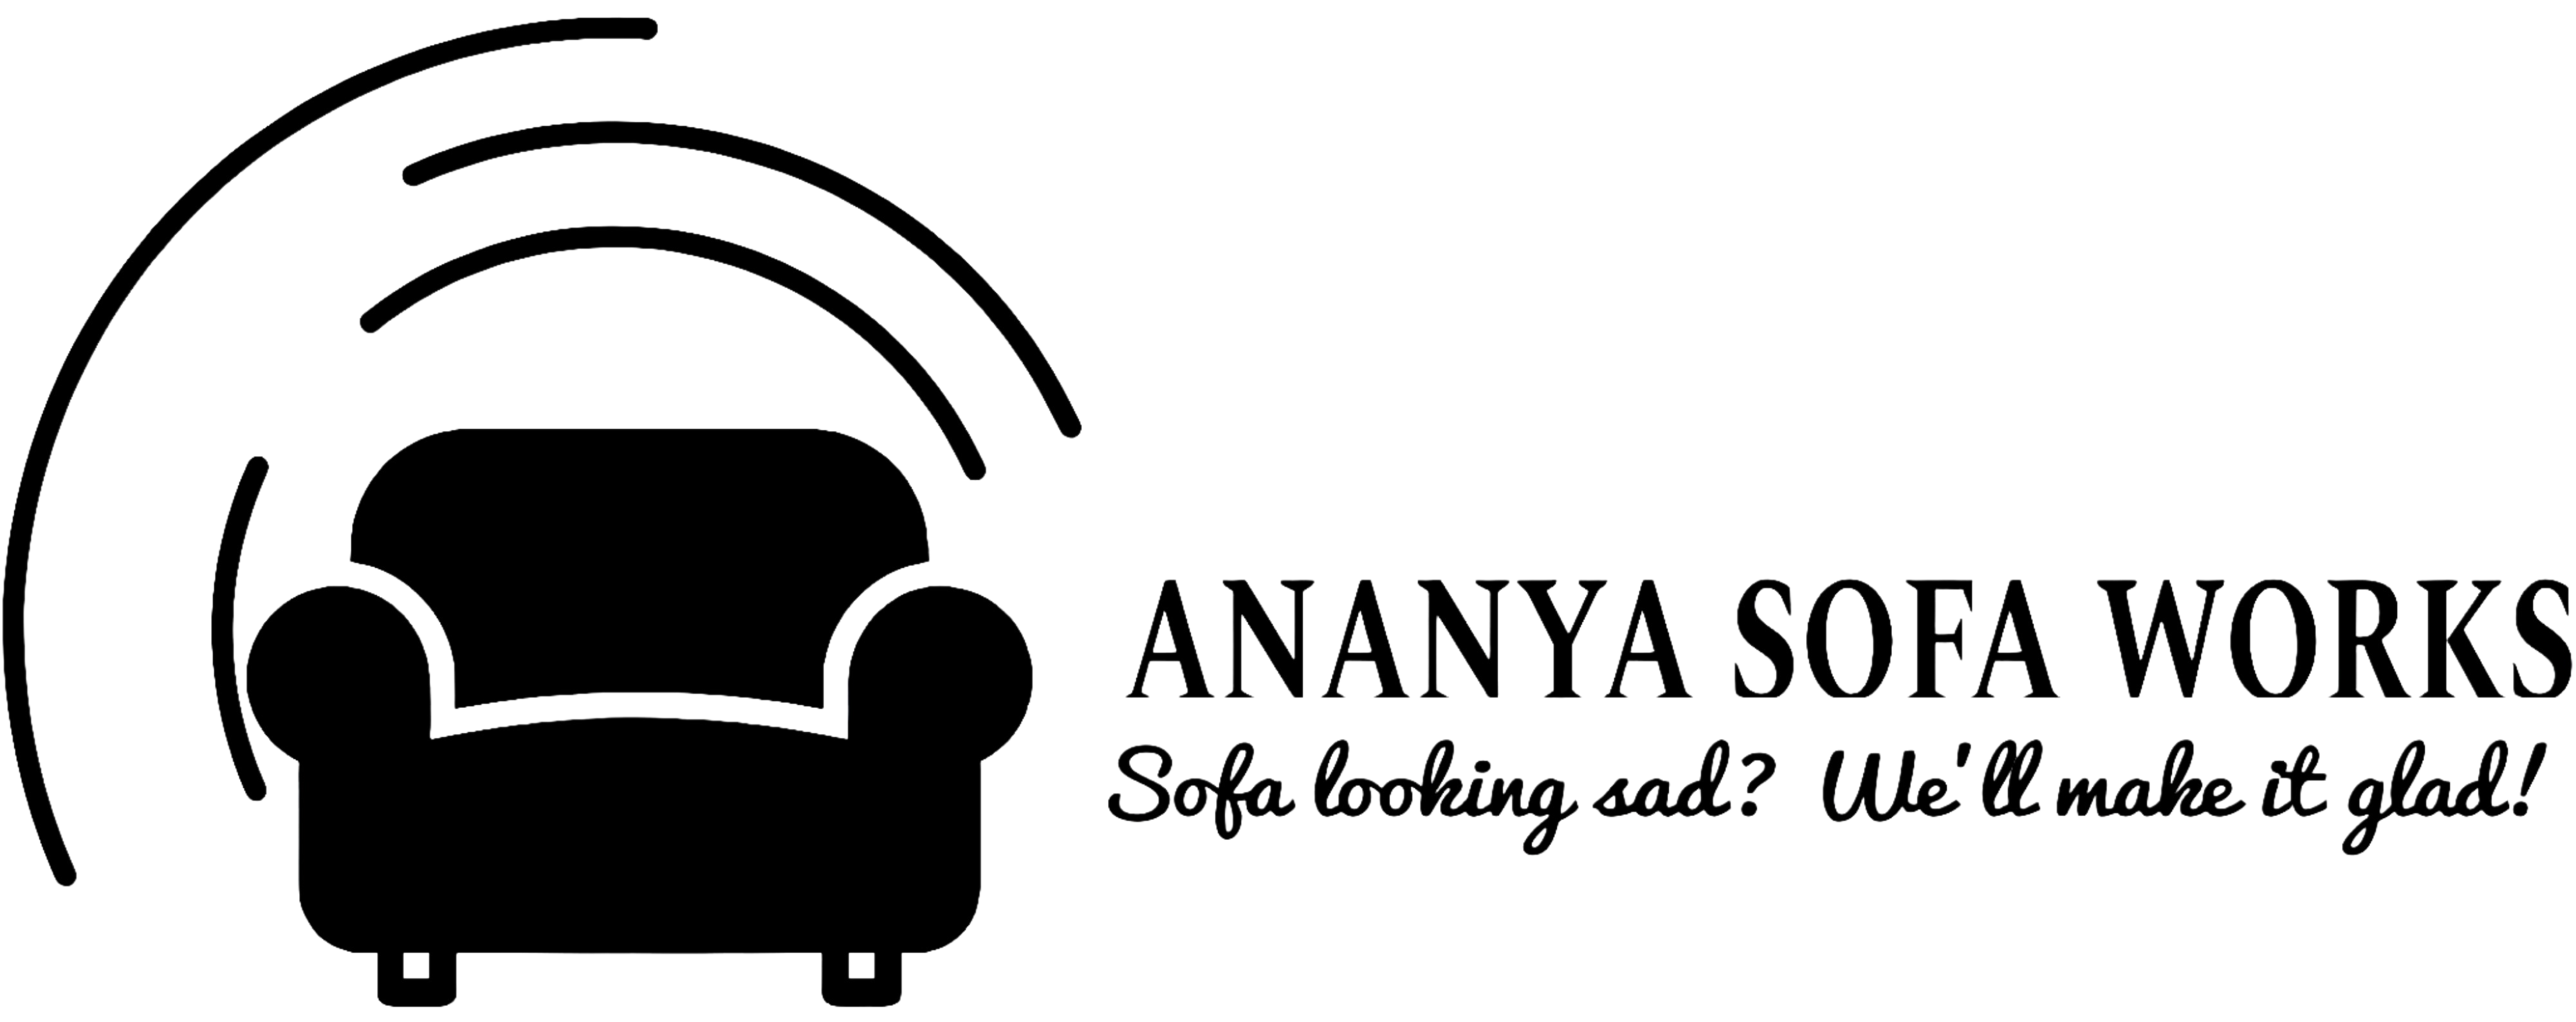 Ananyasofaworks - 